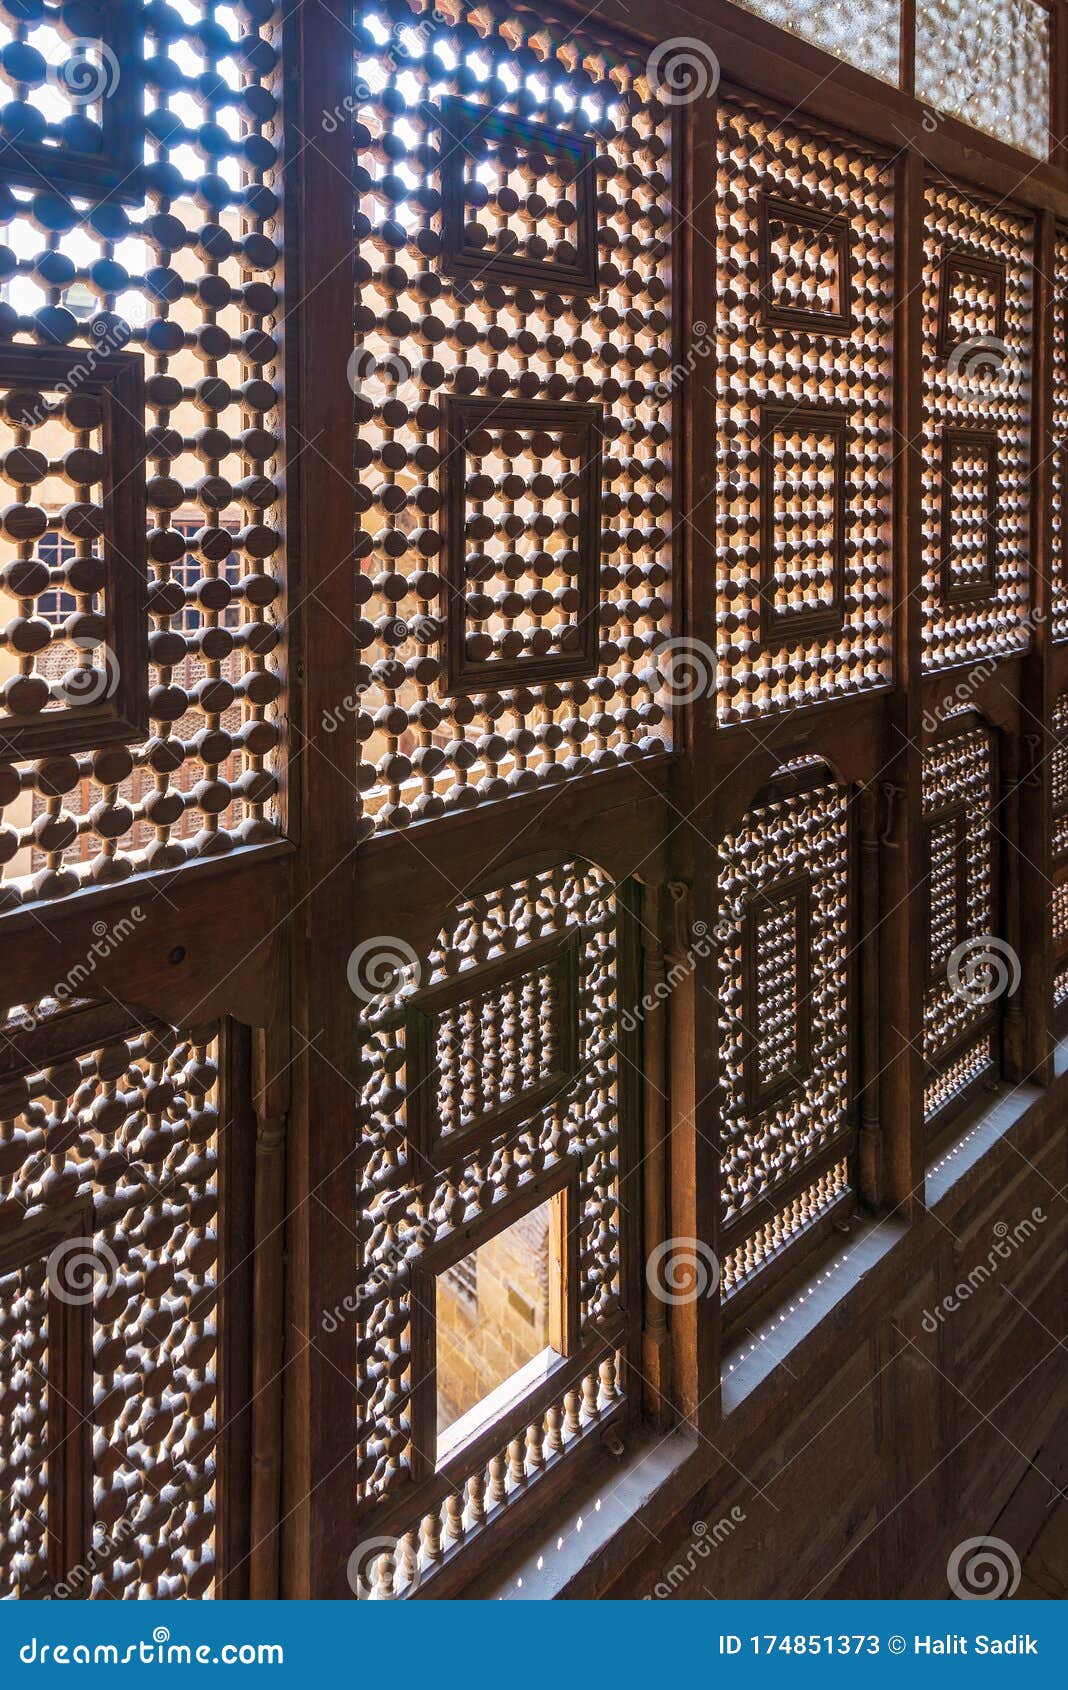 interleaved wooden ornate windows - mashrabiya - in stone wall at abandoned building